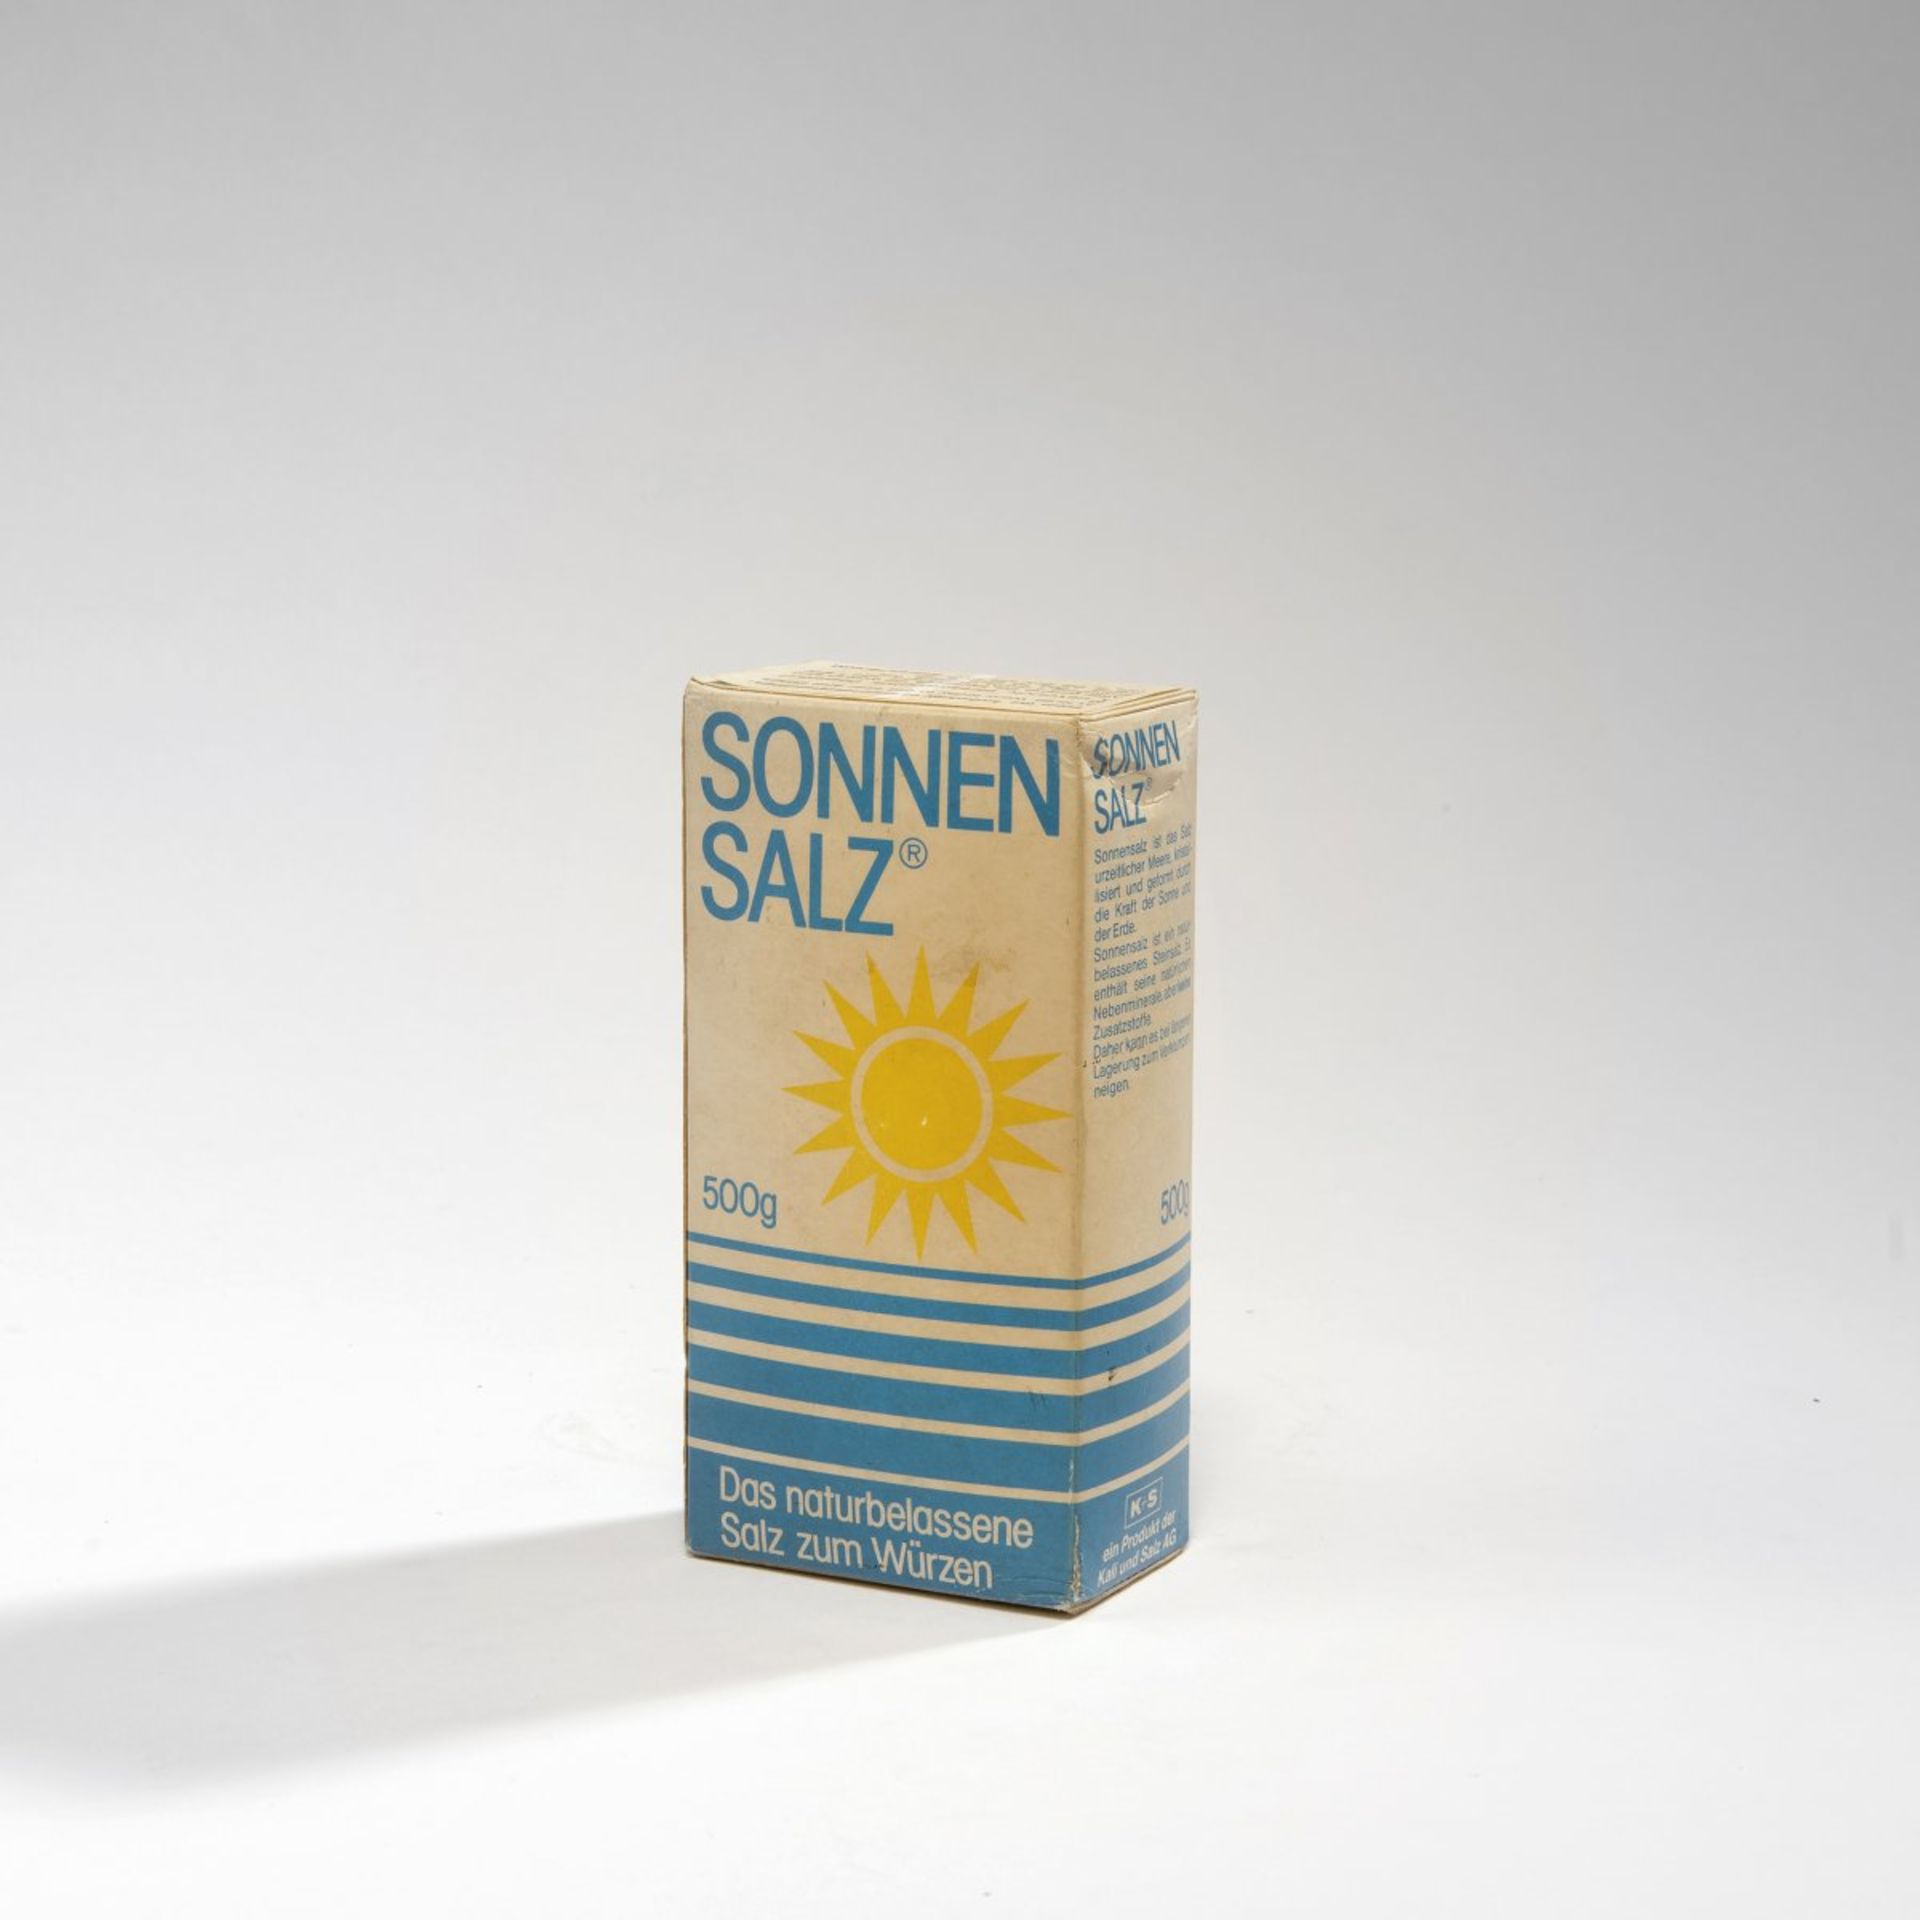 George Brecht (New York City 1926 - 2008 Köln), 'Sonnen Salz' from the Anthology of